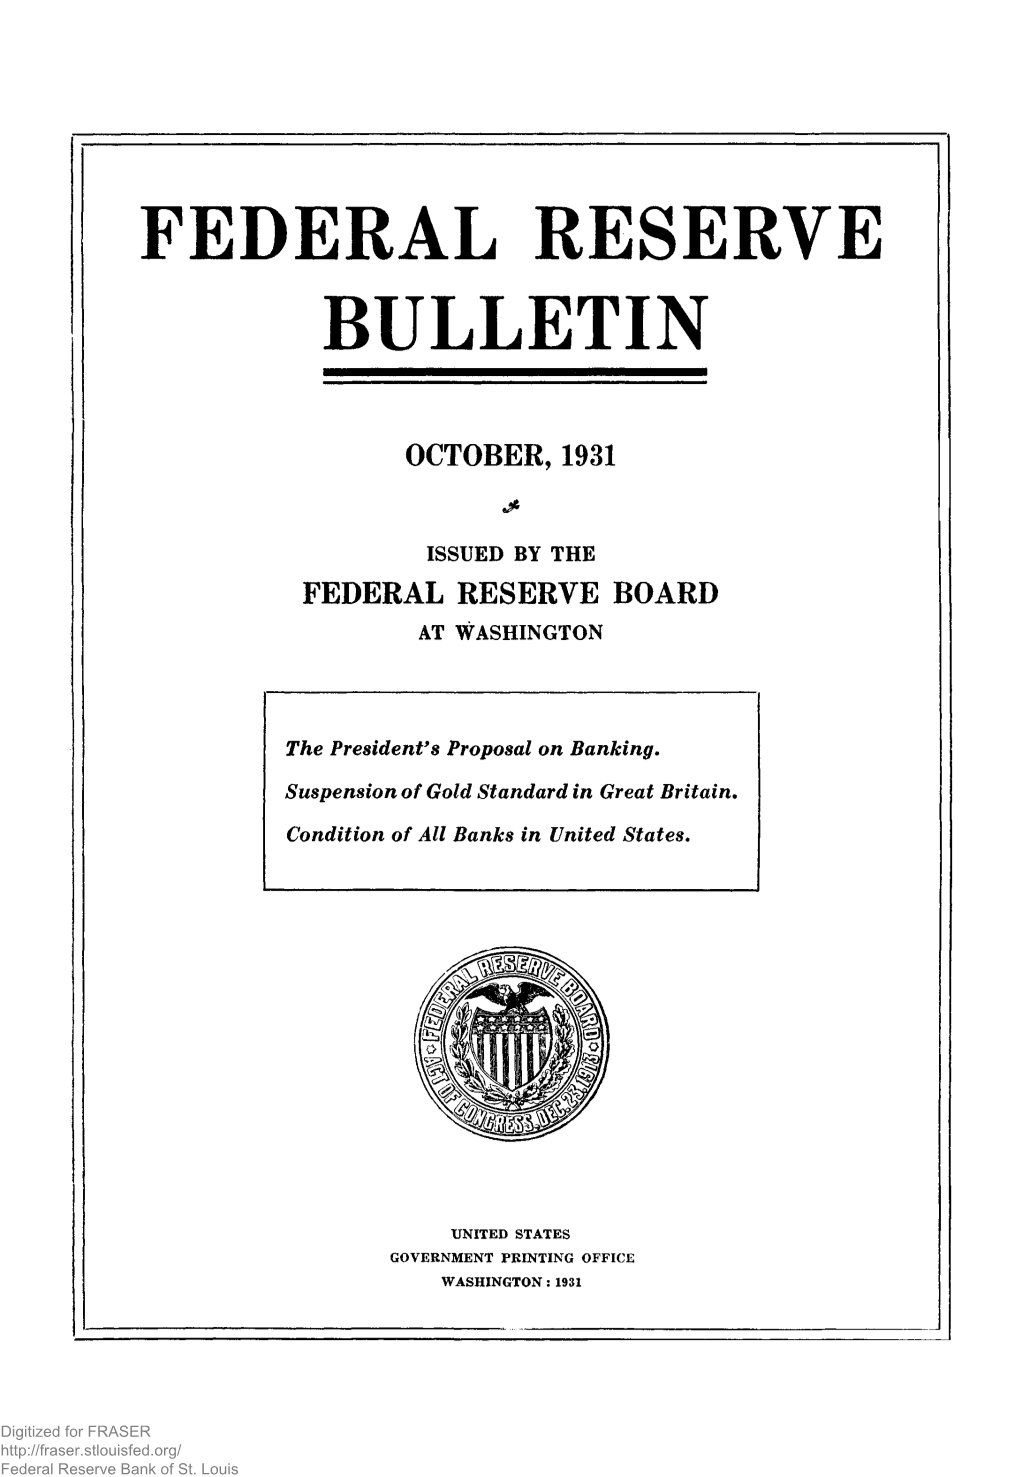 Federal Reserve Bulletin October 1931